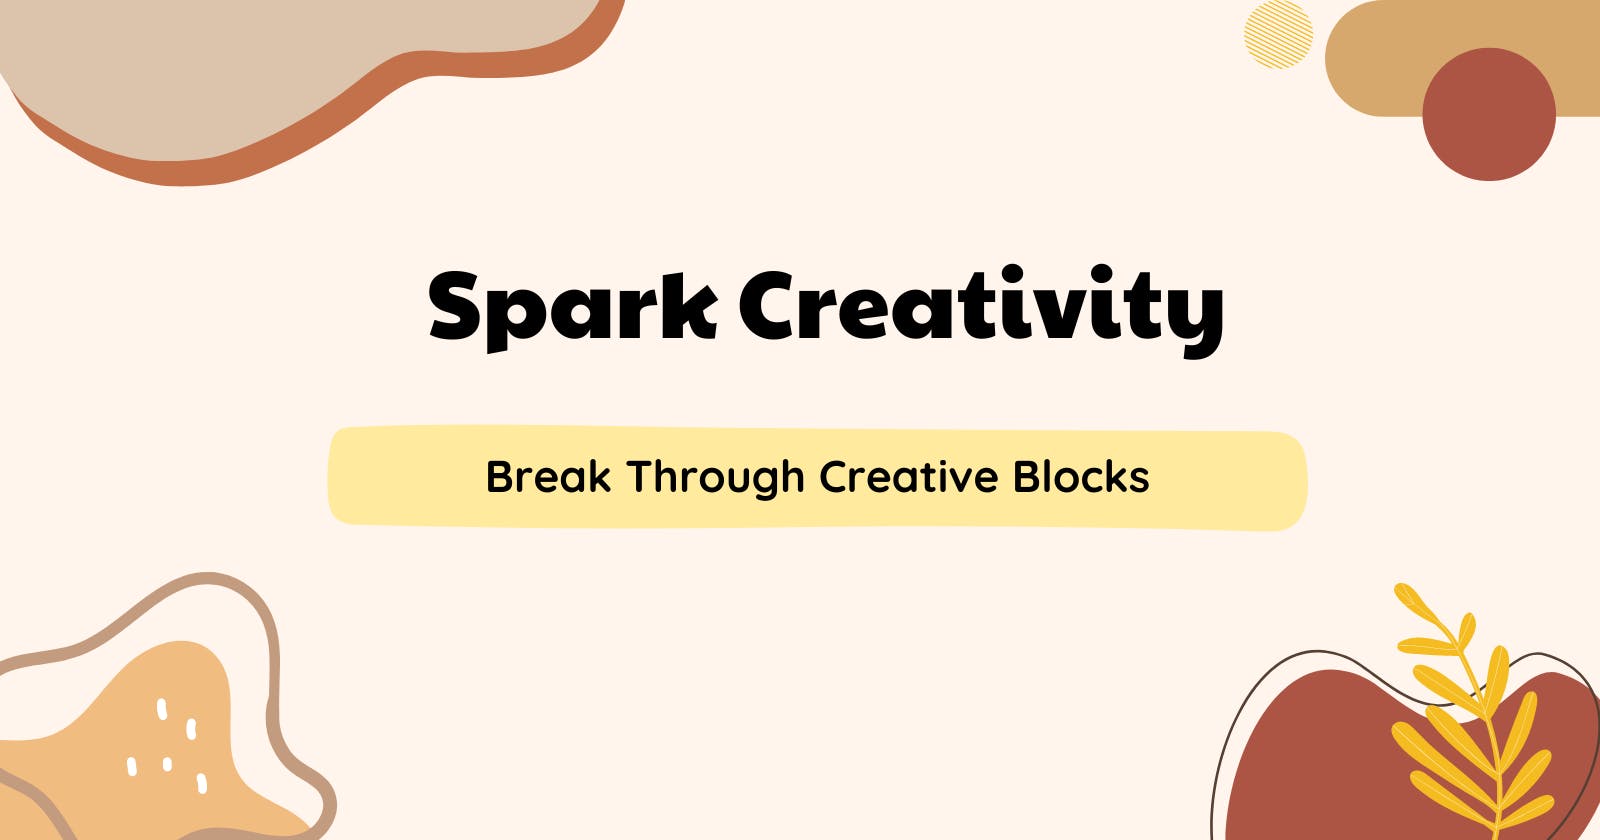 Techniques to Spark Creativity and Break Through Creative Blocks 🎨